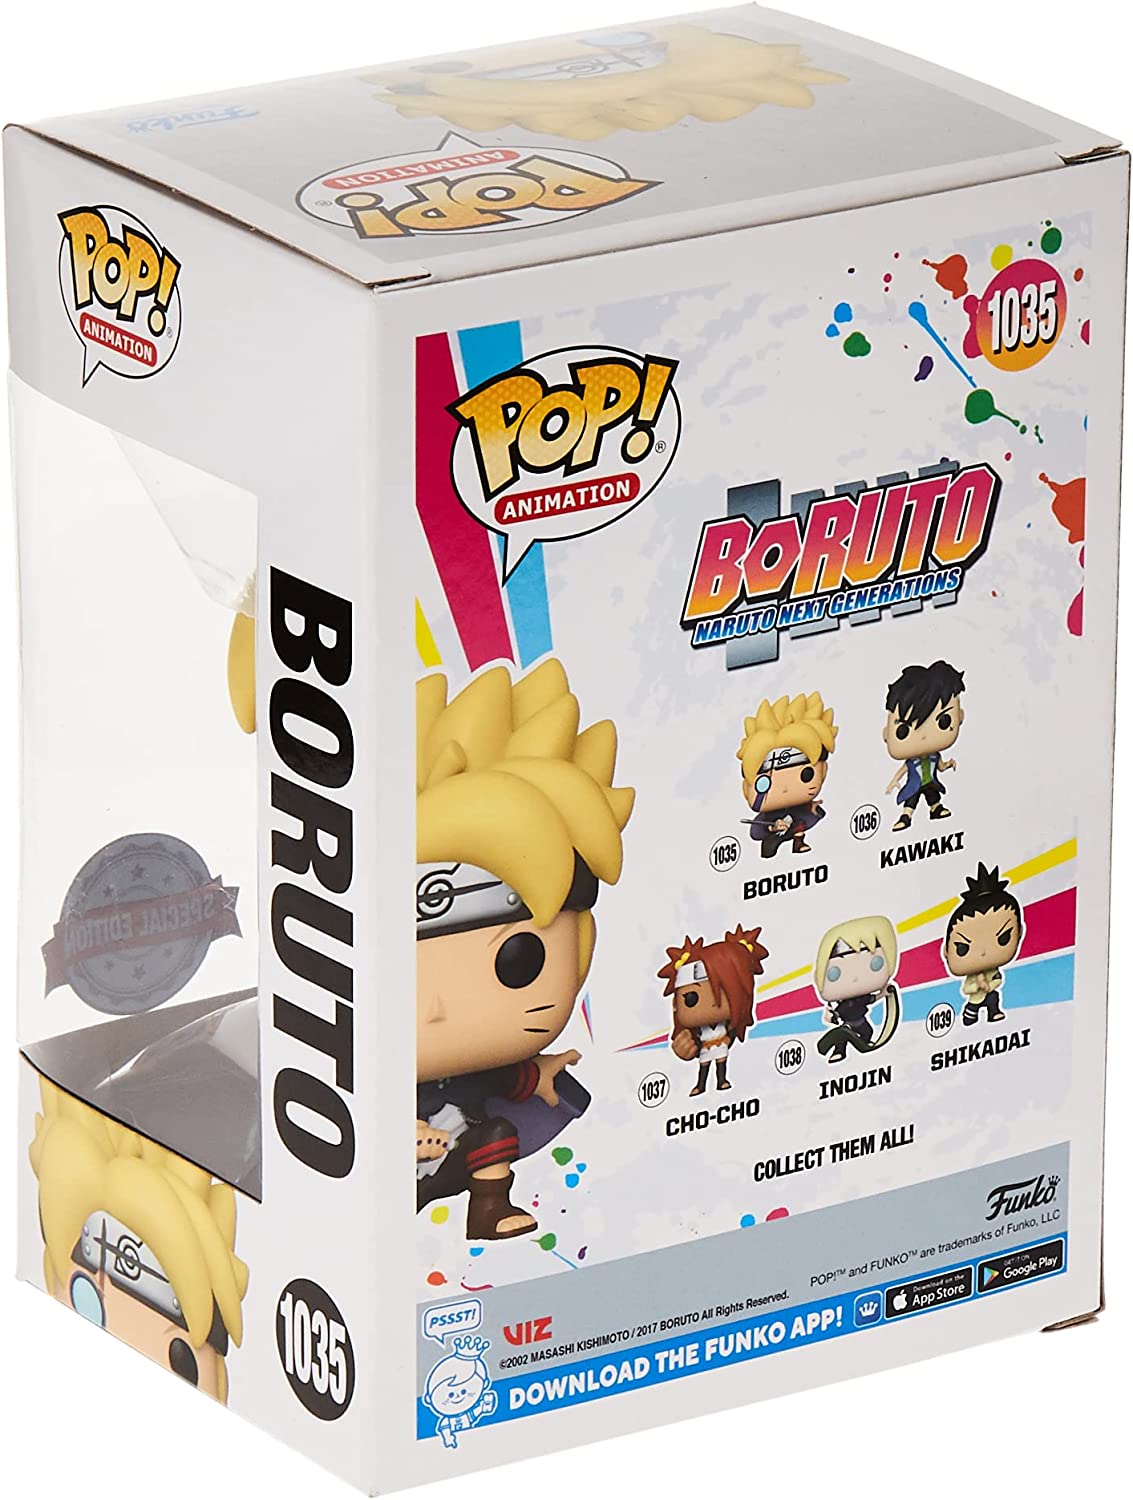 Figurine Boruto With Marks / Boruto / Funko Pop Animation 1035 / Exclusive  Special Edition / Gitd